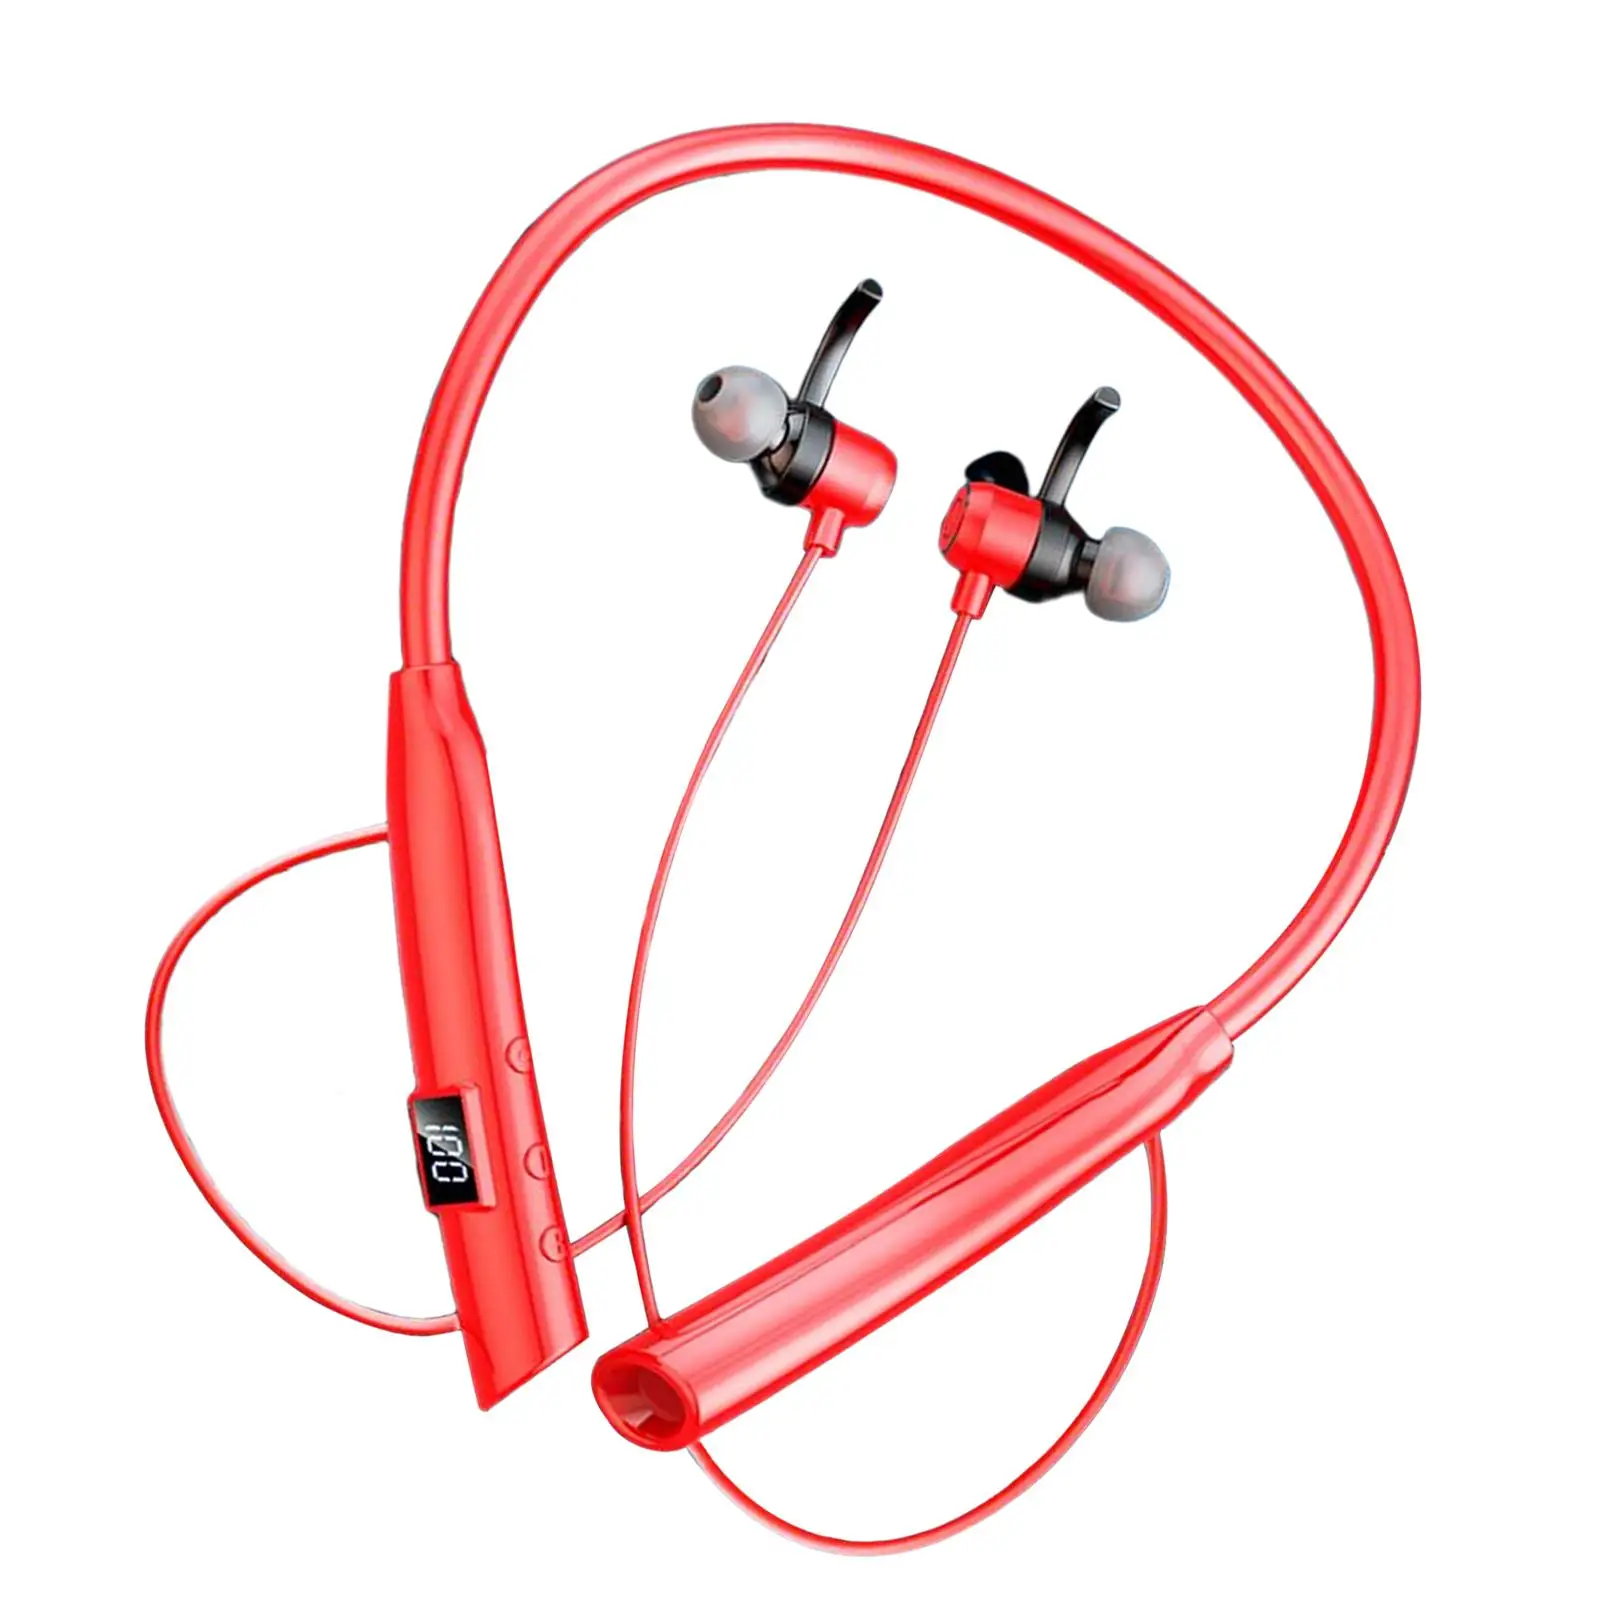 Neckband Headphones W/Mic Stereo Waterproof Lightweight Sports Earphones Around Neck Headphones for Workout Gym